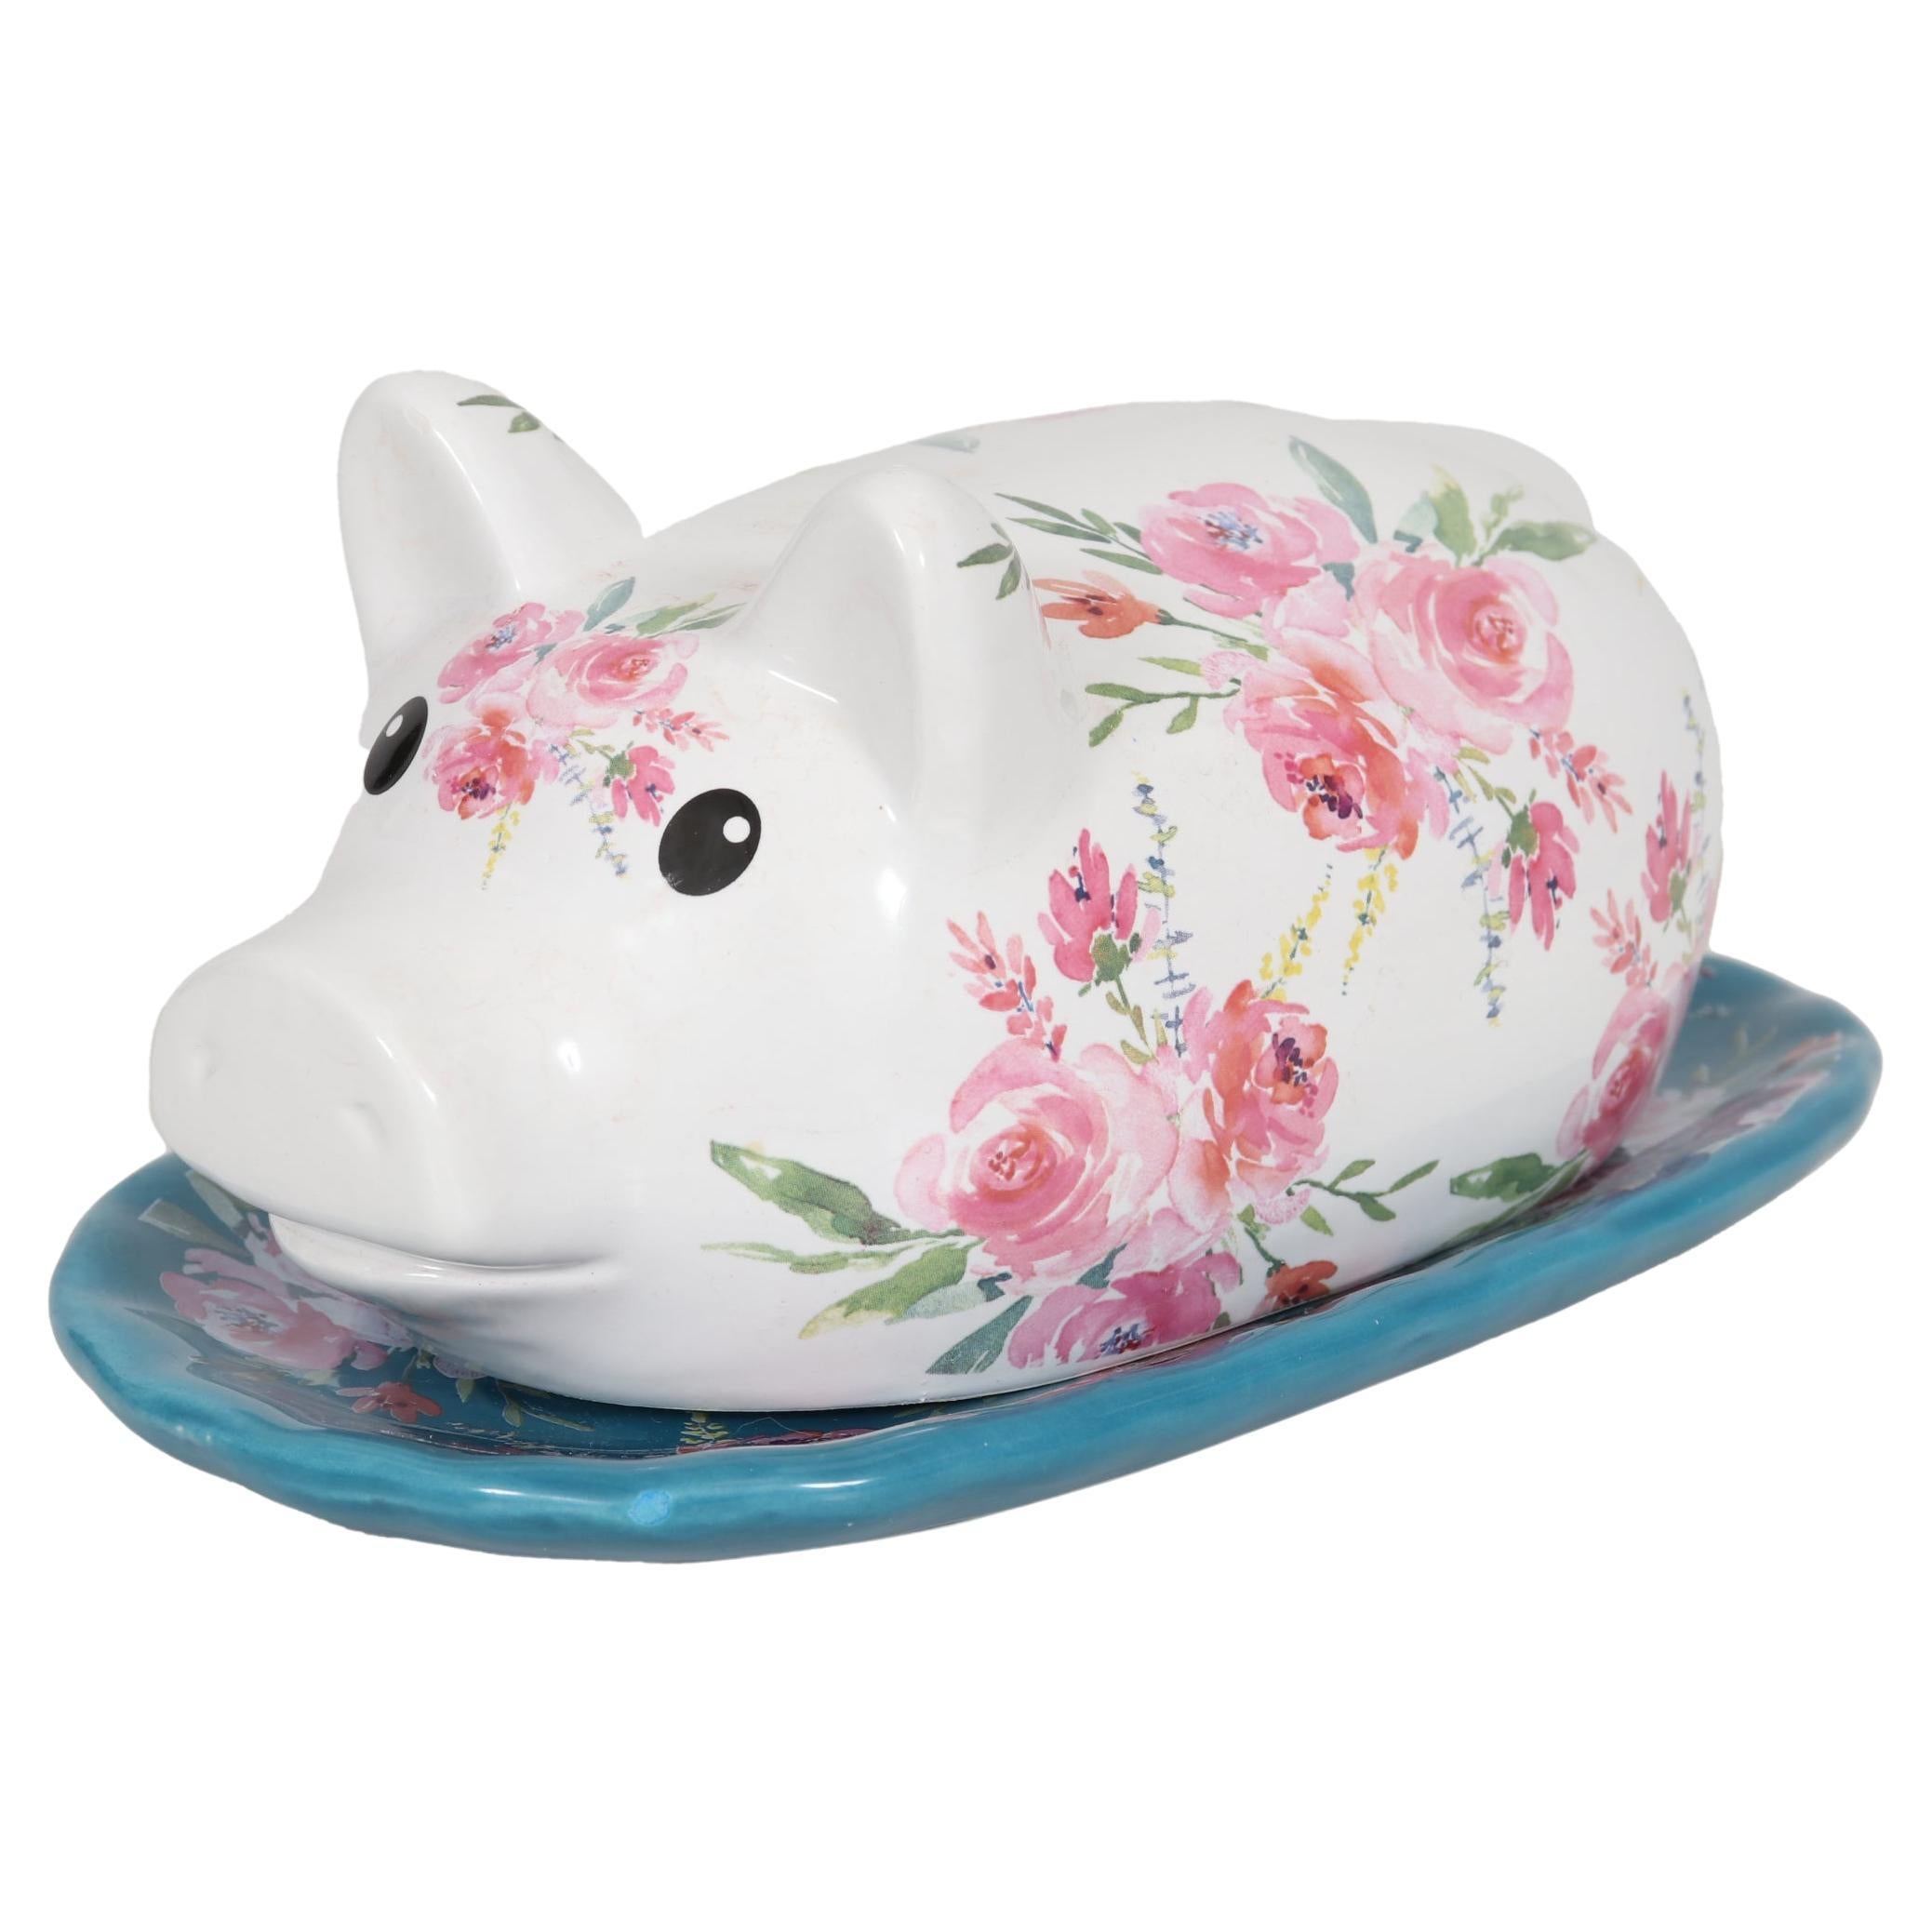 Floral Pig Ceramic Butter Dish